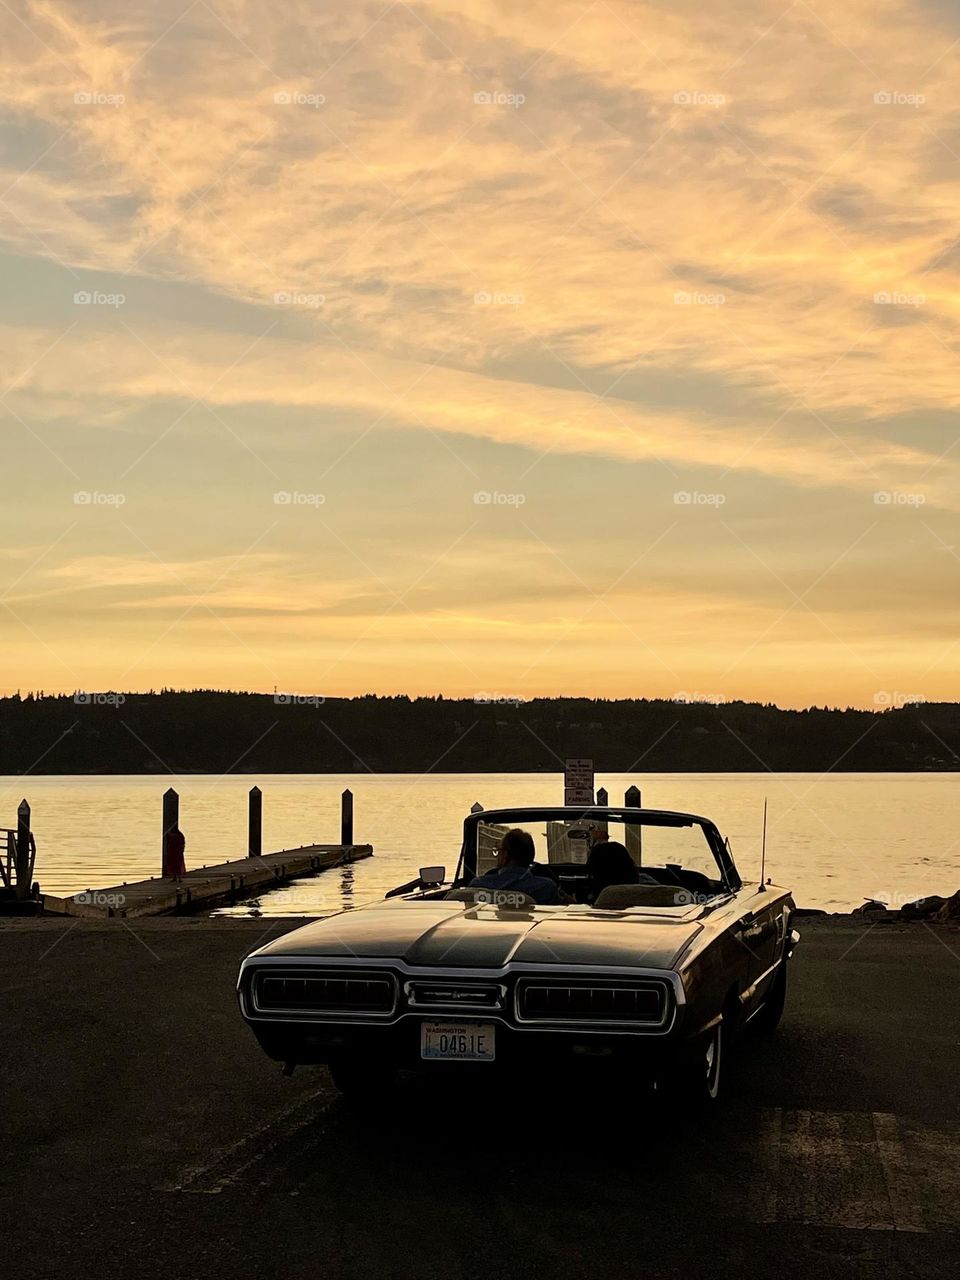 Retro car at the sunset beach 